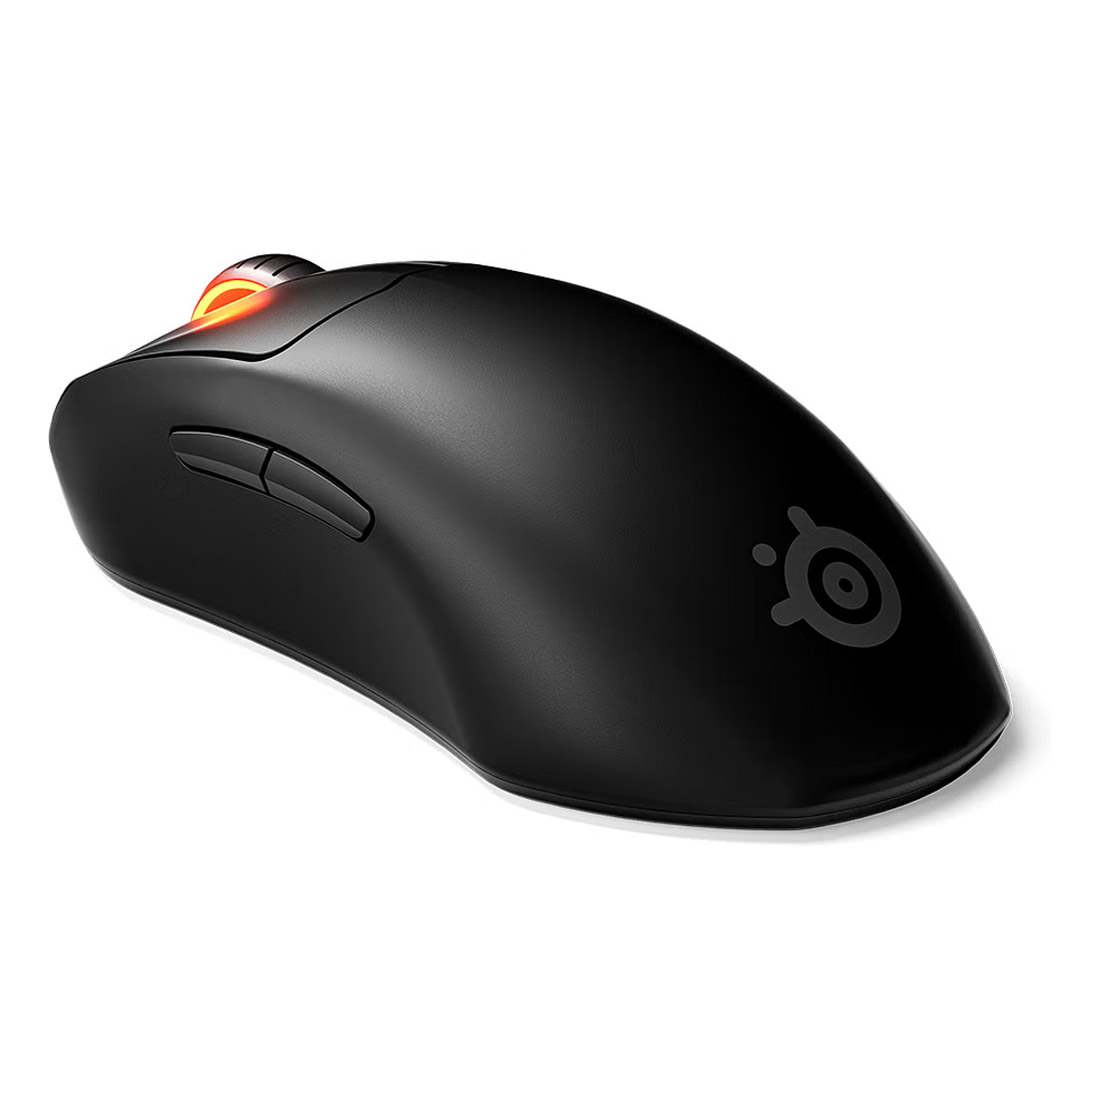 SteelSeries Steelseries Prime Mini Wireless Gaming Mouse - Black